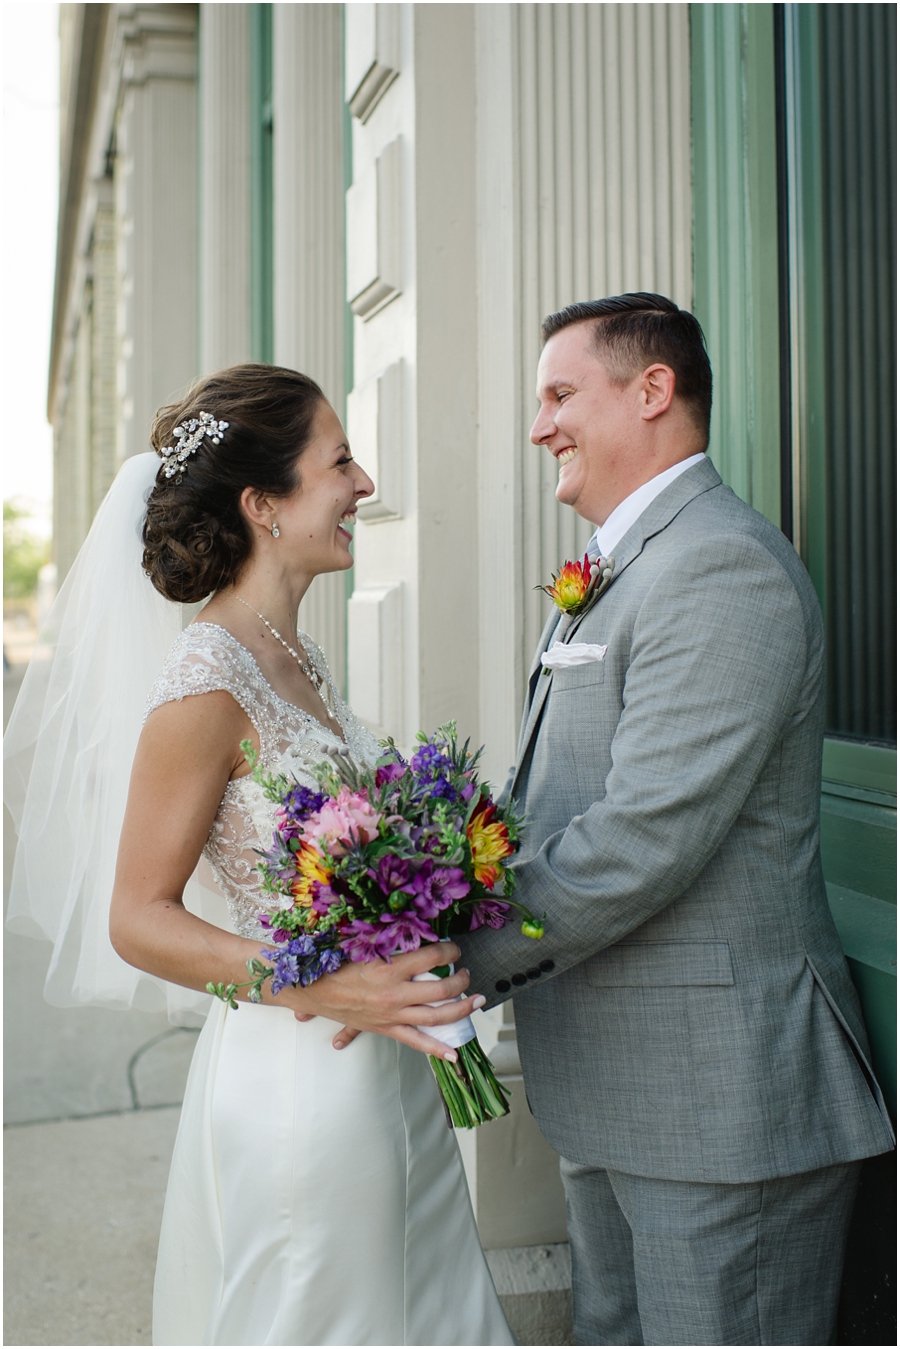 Therese & Dan – Pritzlaff Building, Milwaukee Wedding Photography